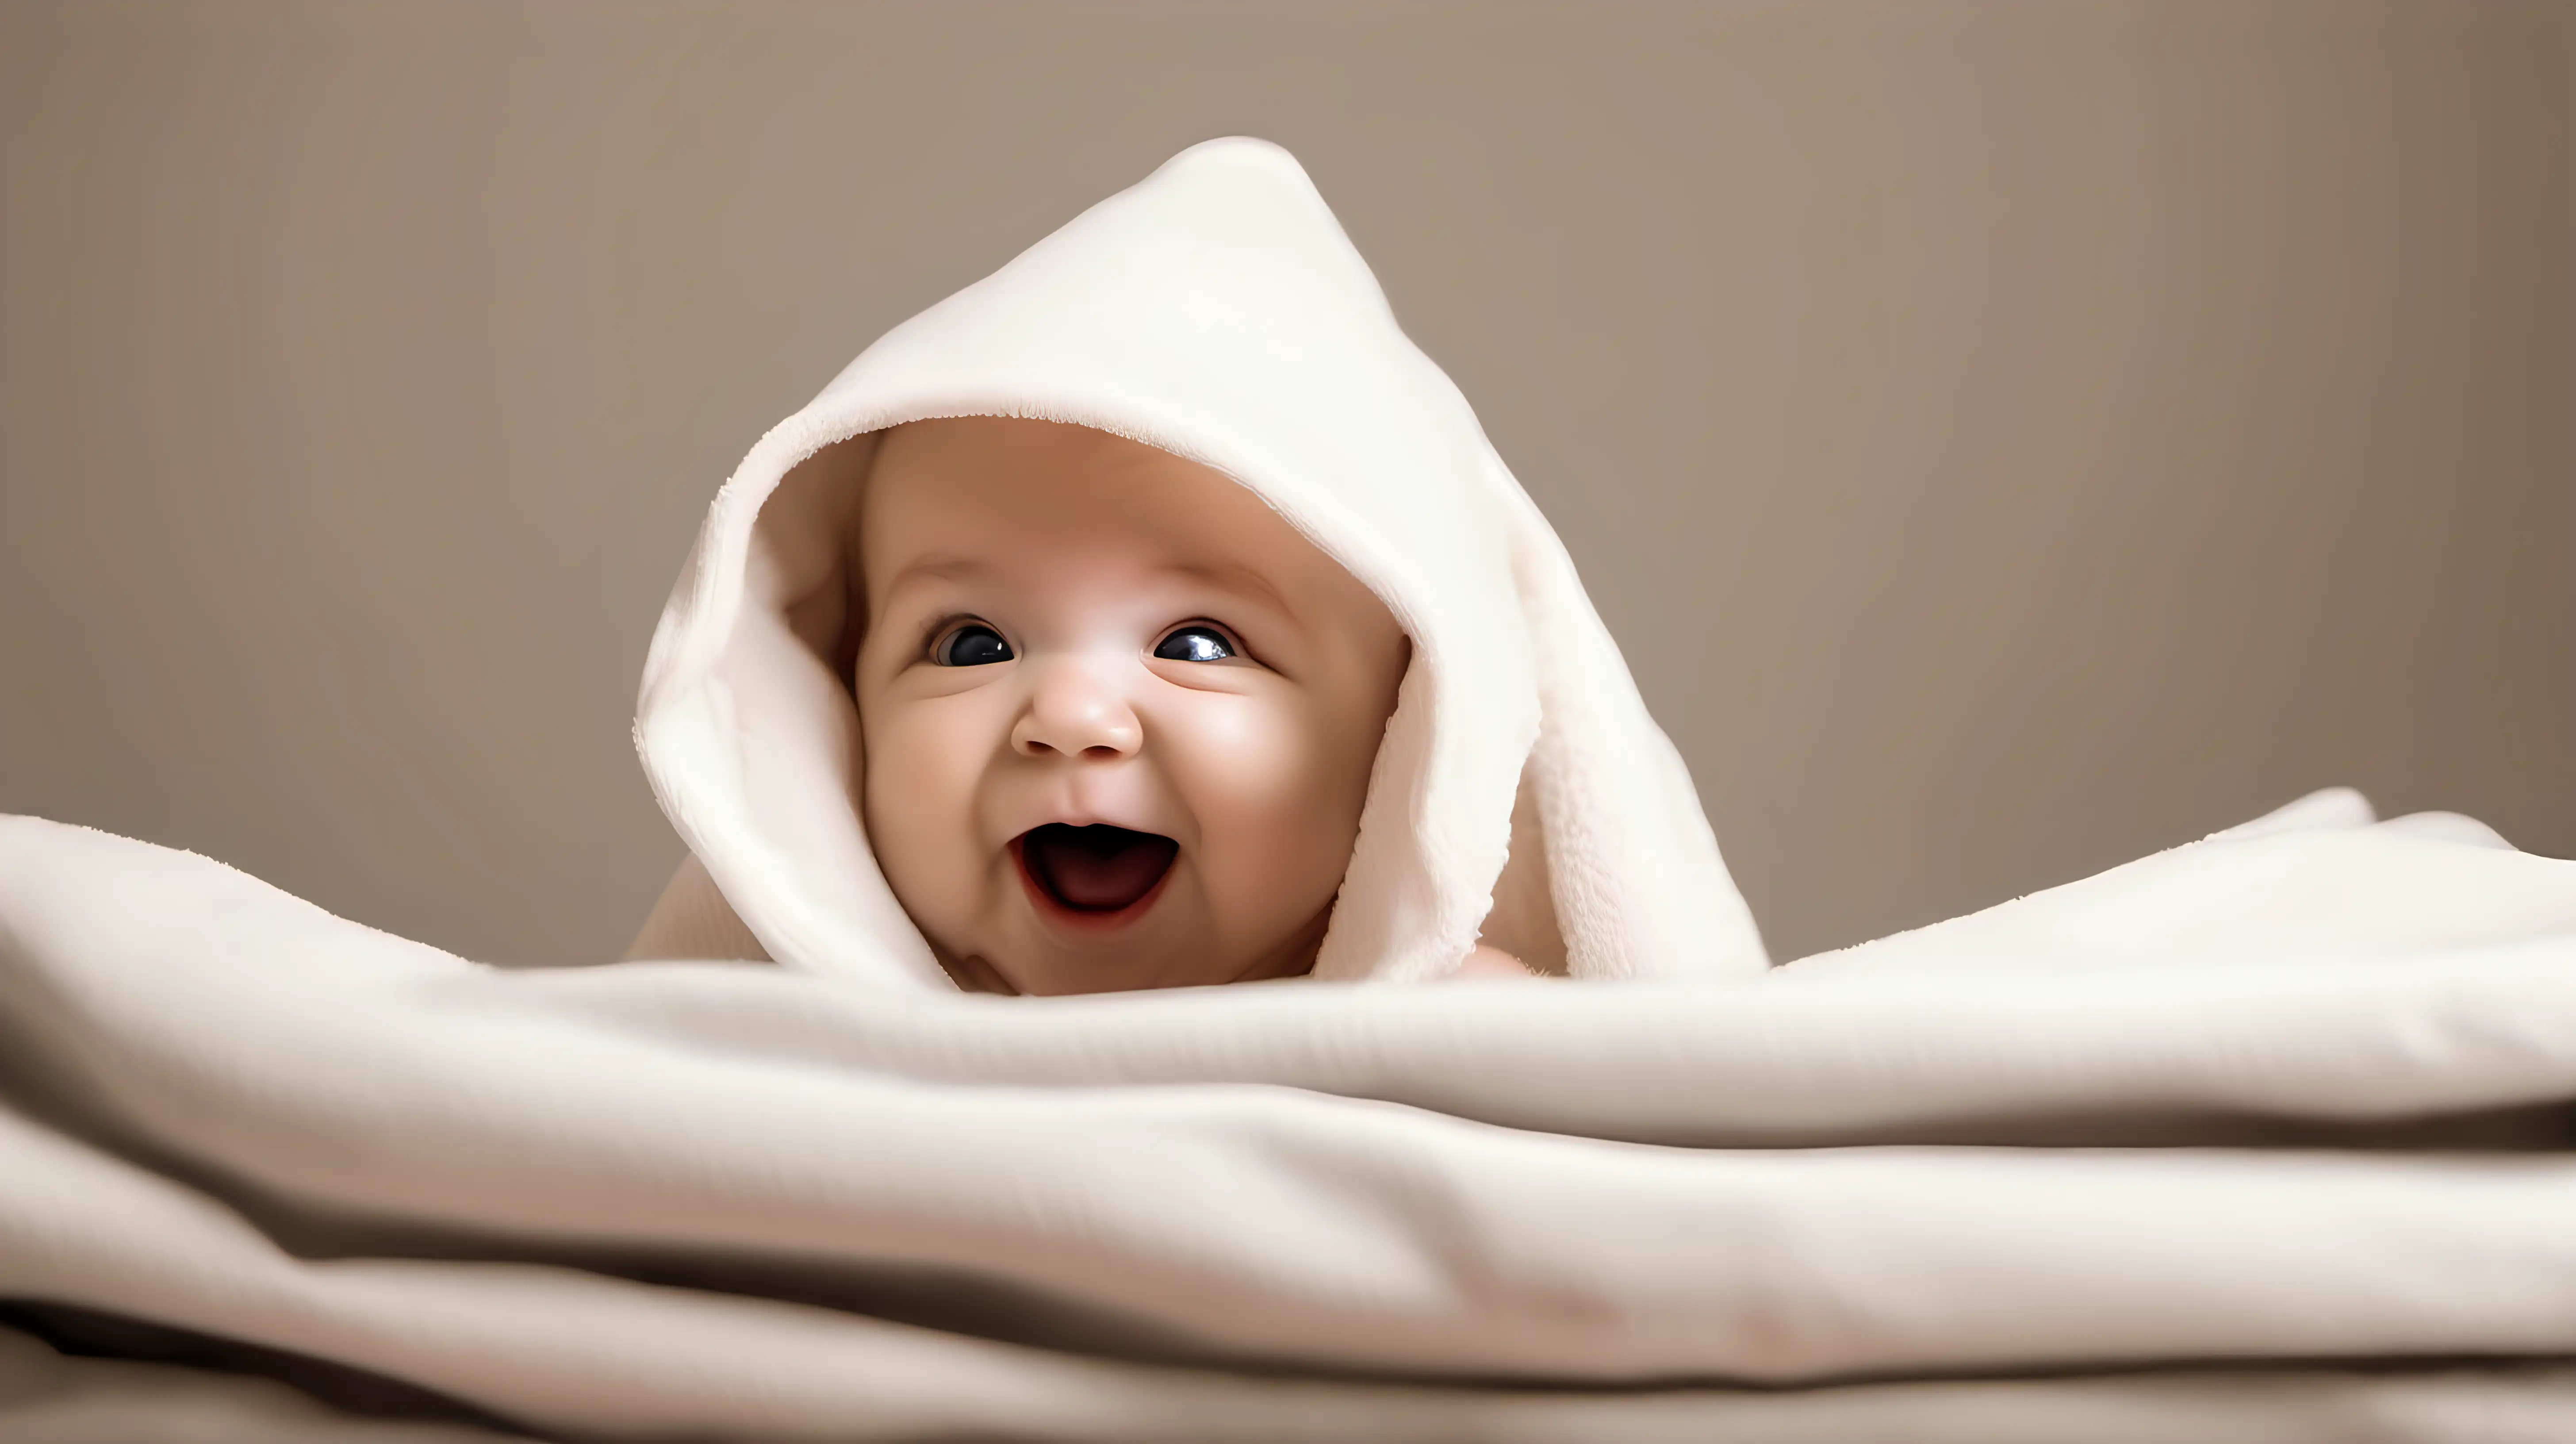 Baby Playing PeekaBoo with Soft Blanket Heartwarming Joyful Moment